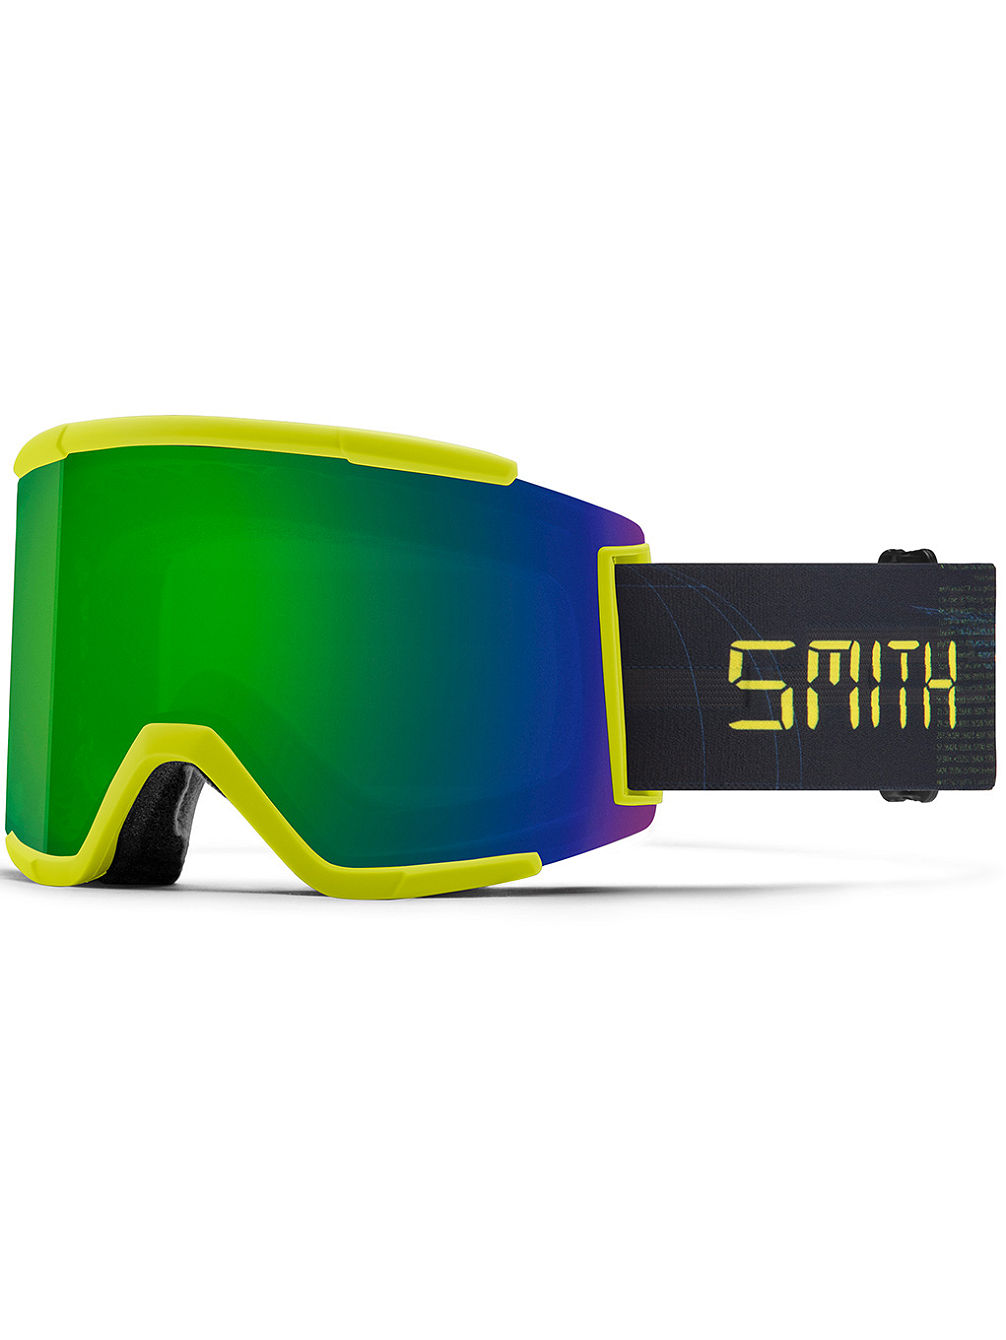 Squad XL Neon Yellow Digital Goggle